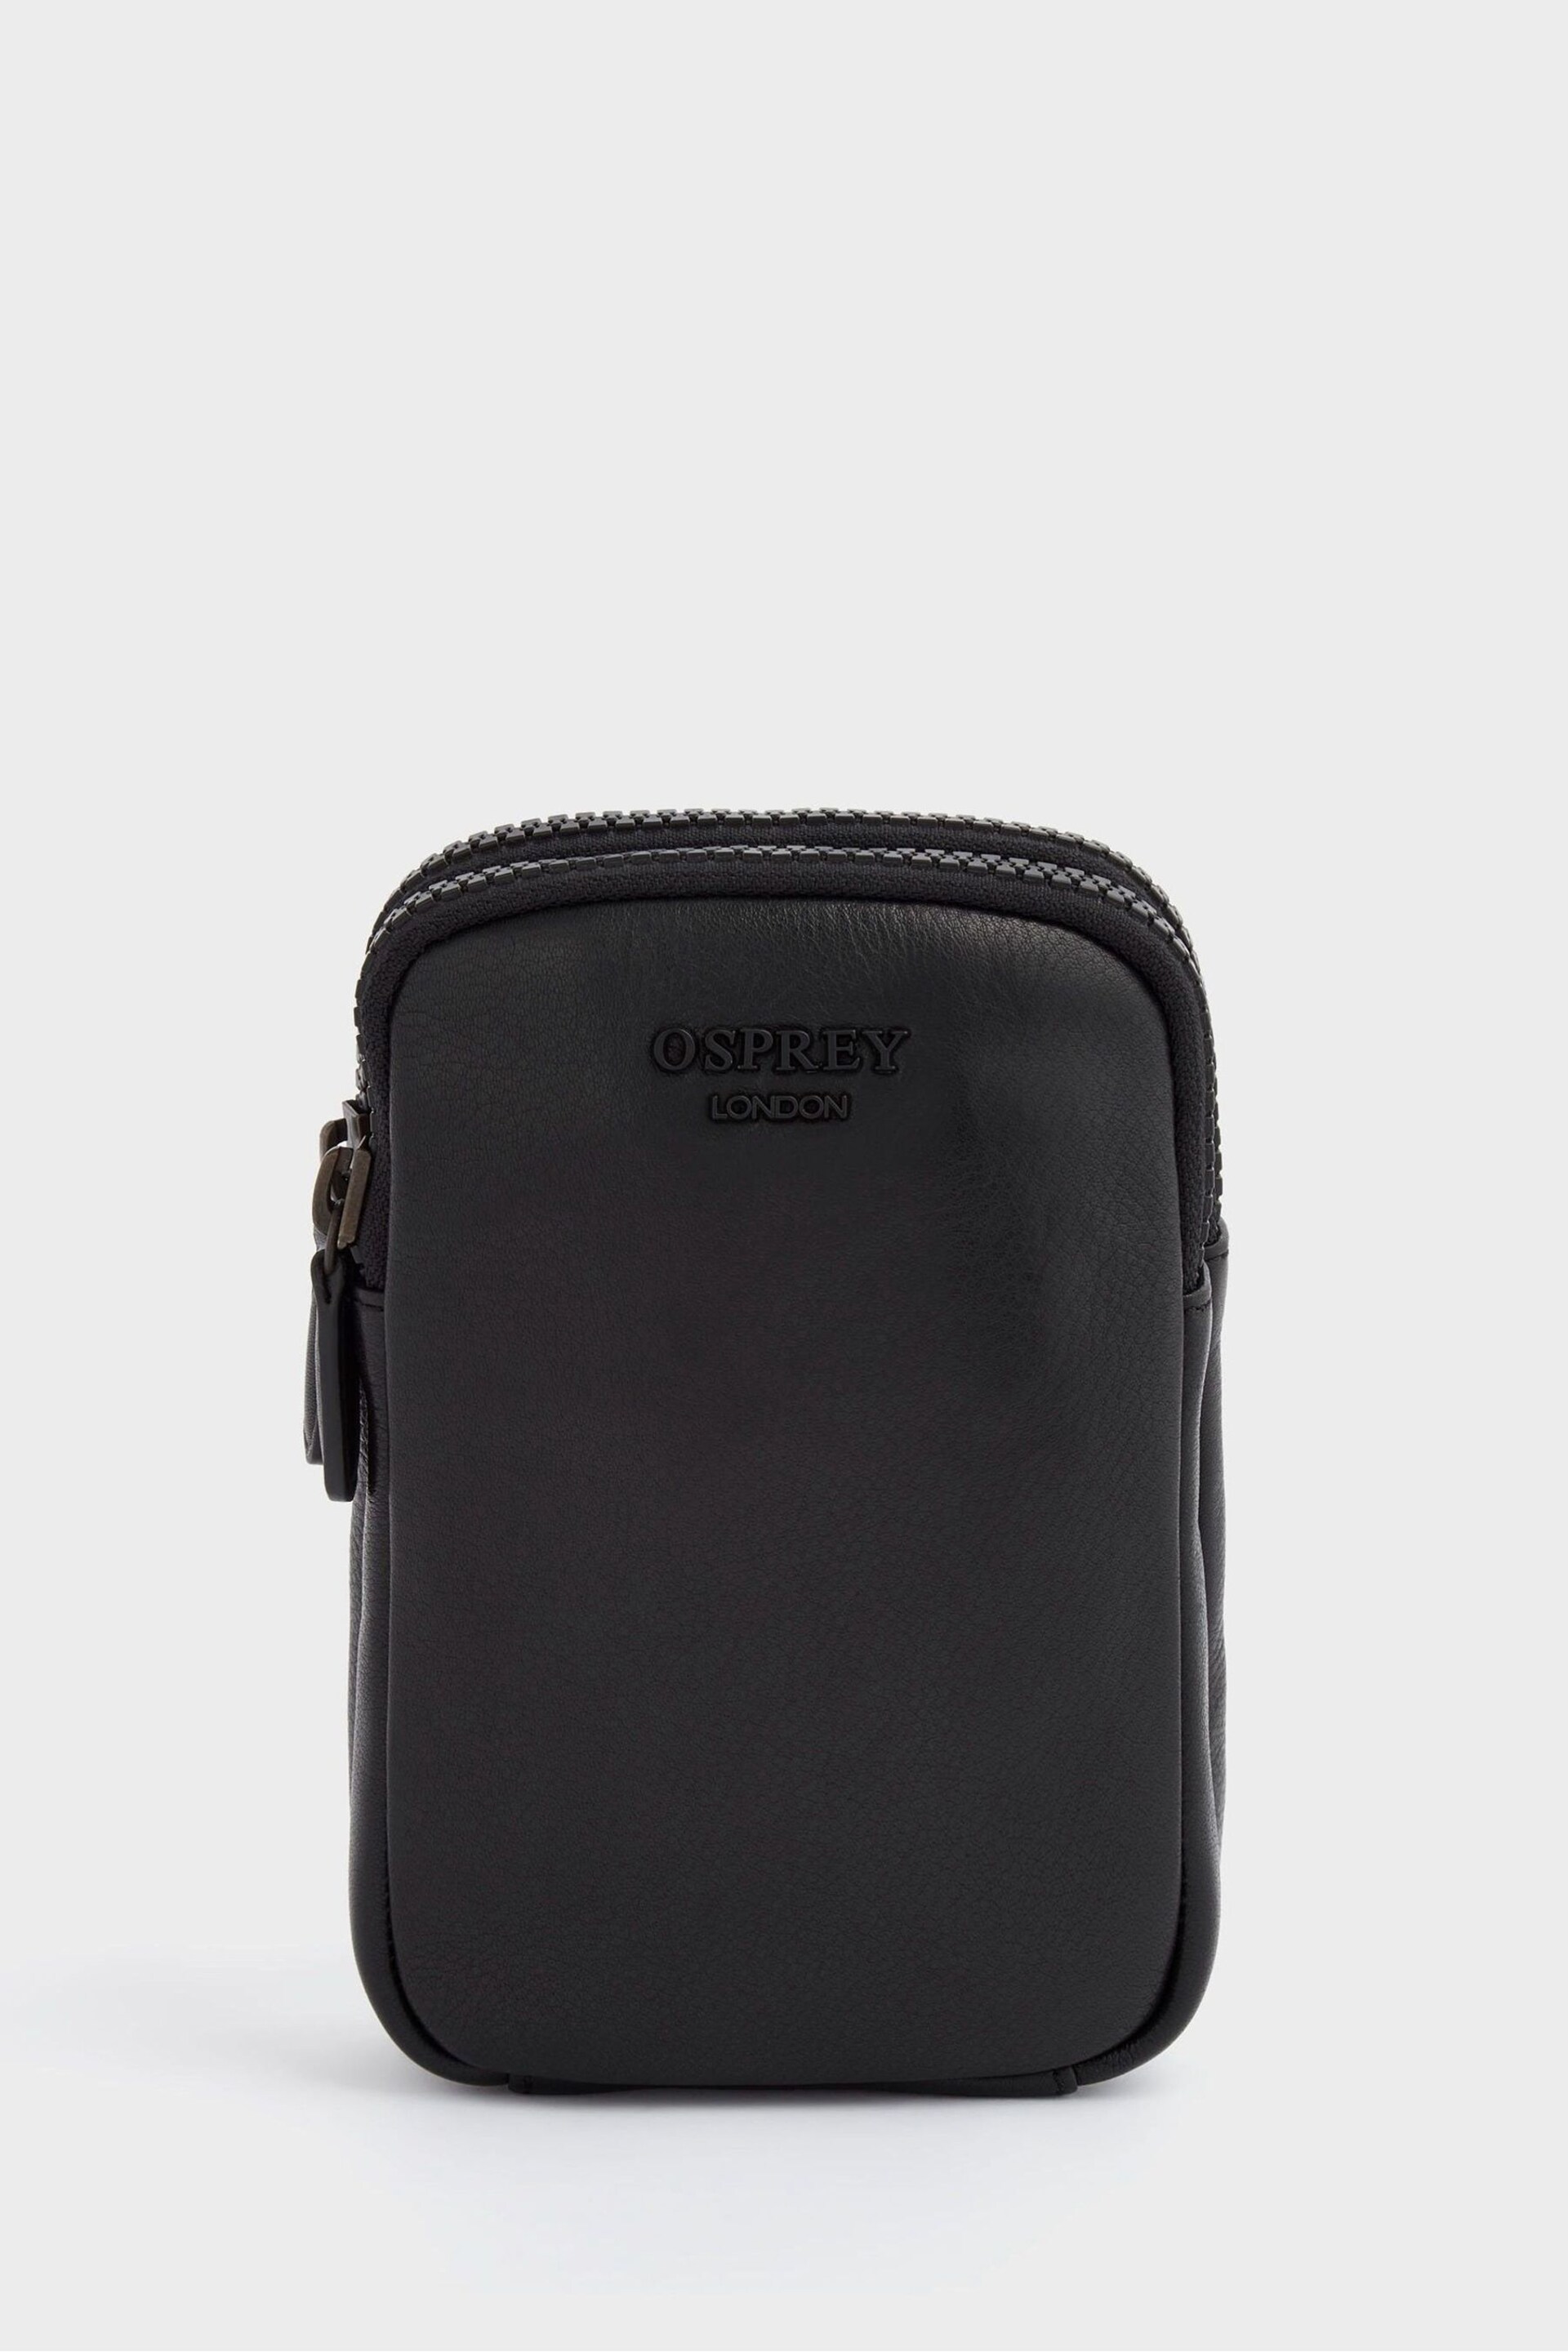 OSPREY LONDON The Onyx Leather Black Phone Bag - Image 3 of 7